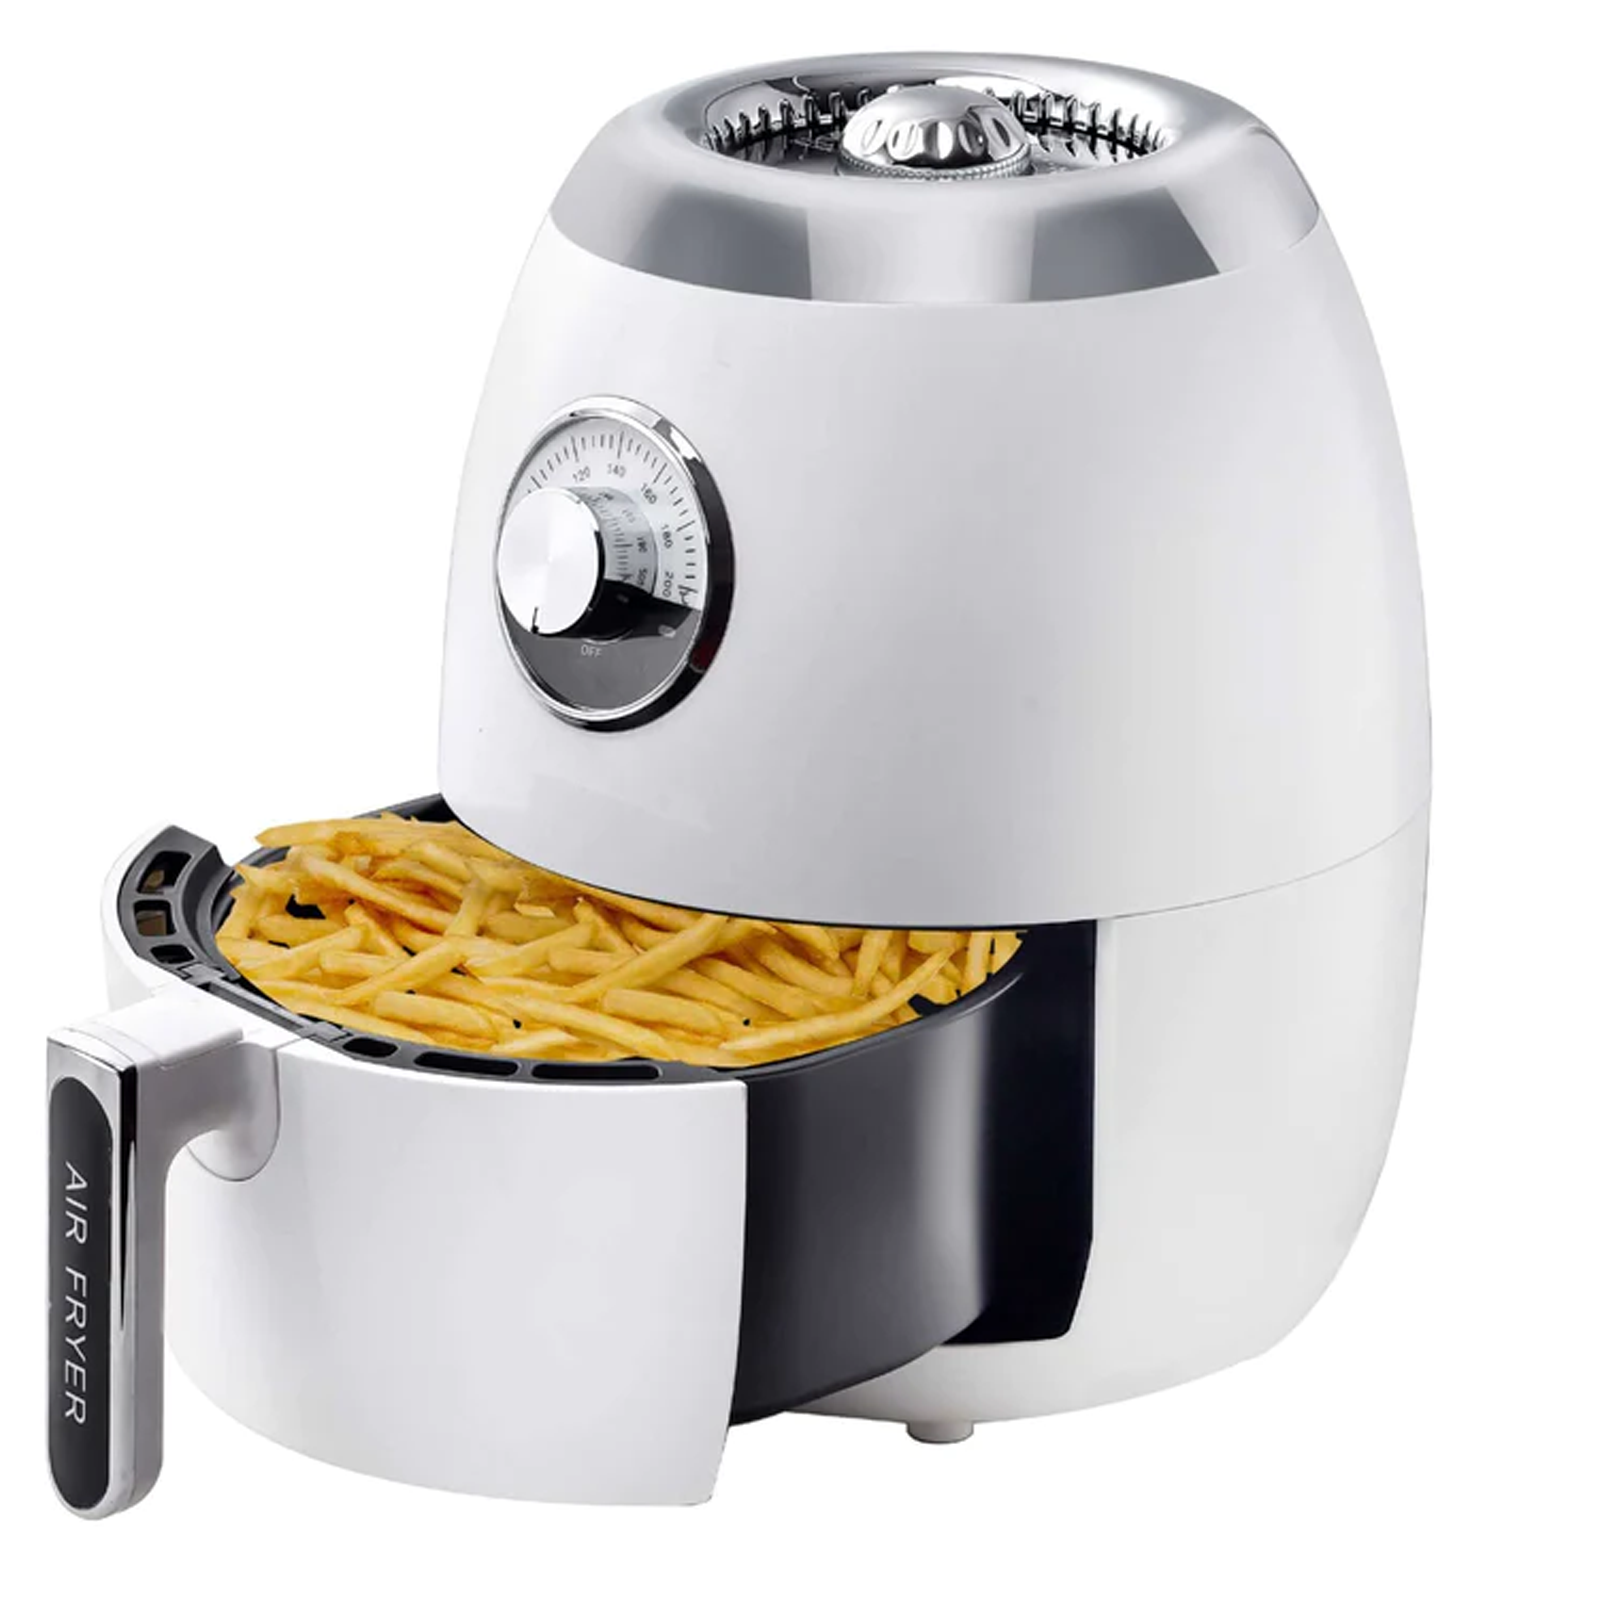 Use Ölfreies Watt Smart Fryer Weiß Kochen und White Home Air Frittieren Fritteuse Heißluftfritteuse Elektrische SYNTEK Fryer 1500